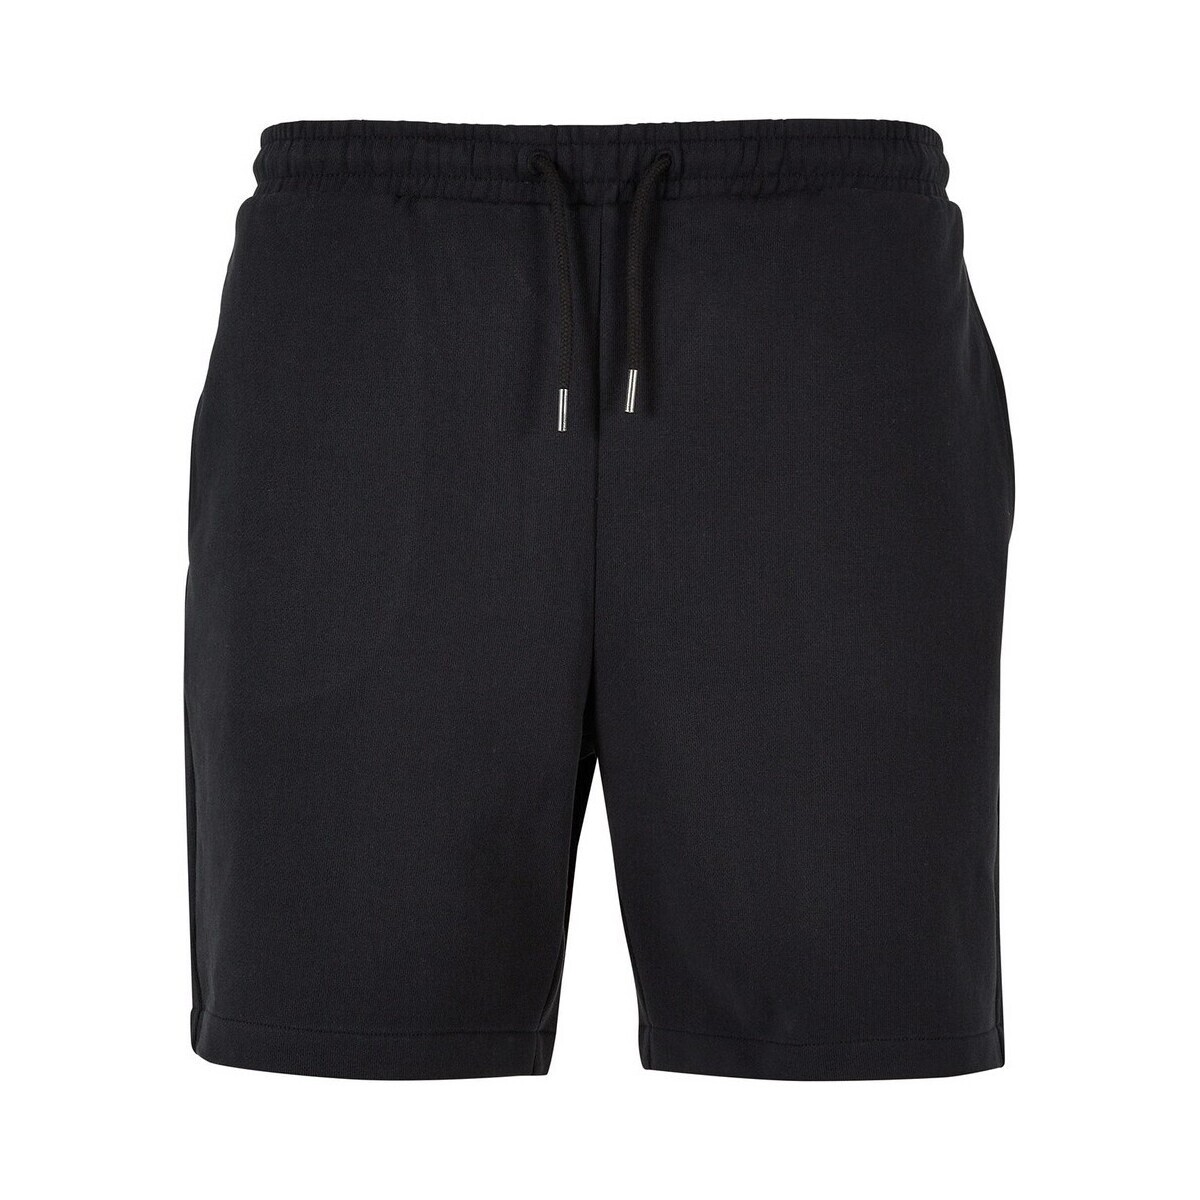 textil Hombre Shorts / Bermudas Build Your Brand RW9836 Negro